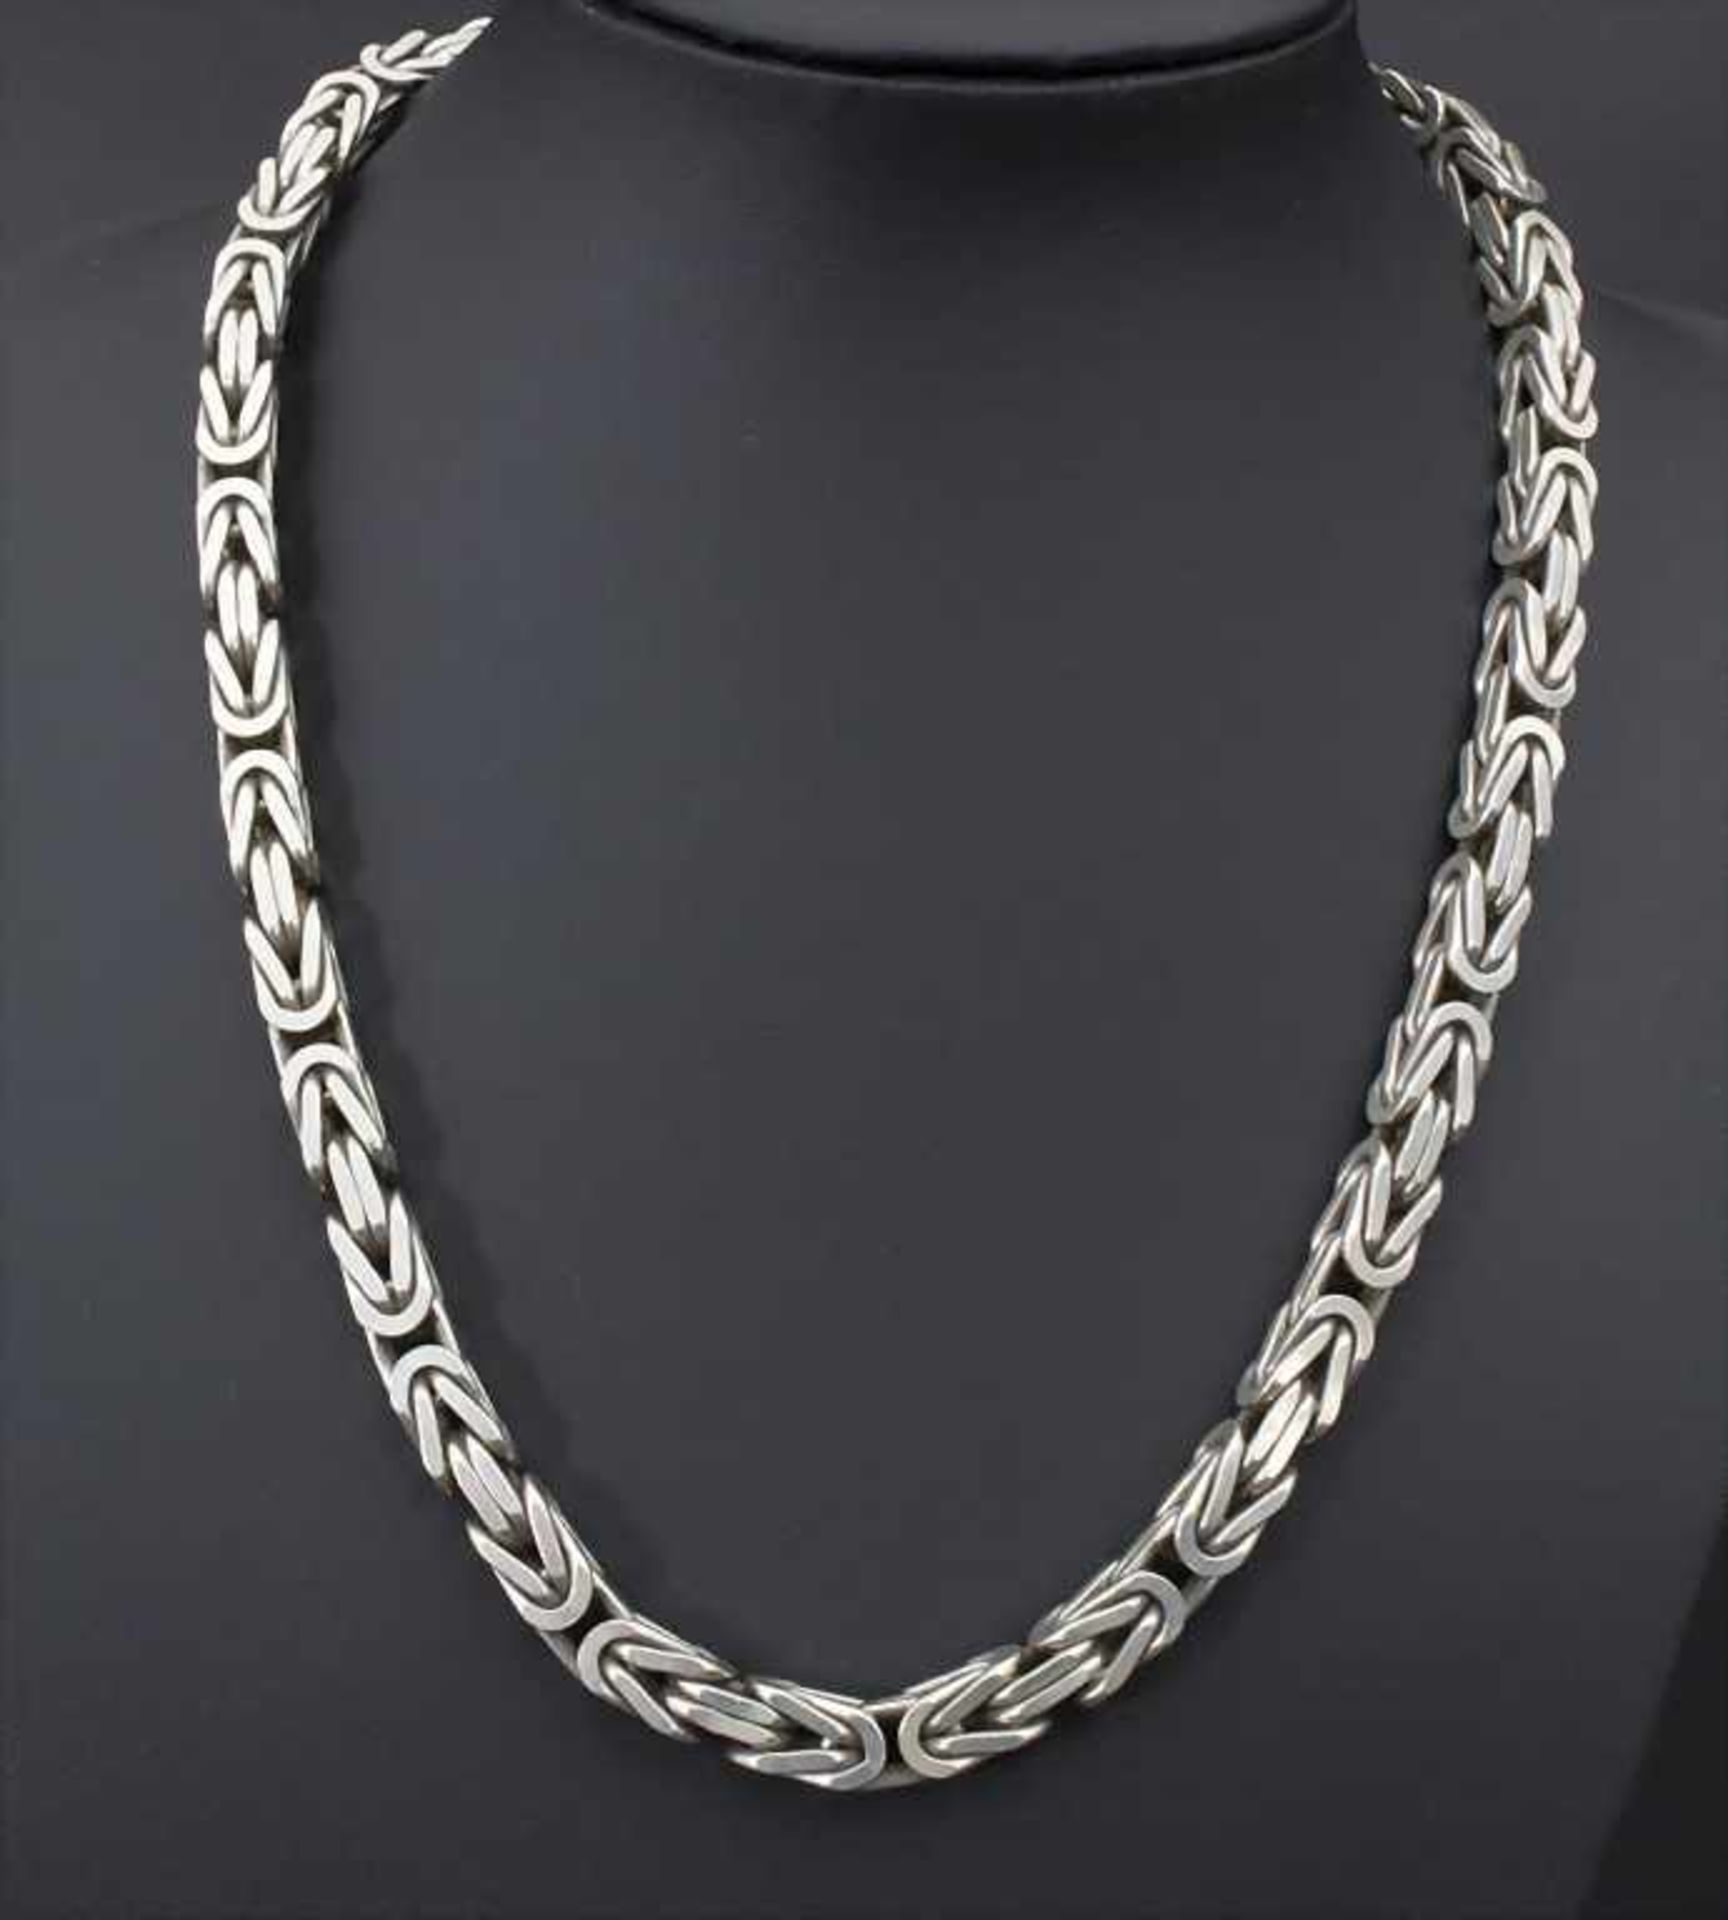 Königskette in Silber / A necklace in sterlingMaterial: Sterling Silber 925/000,Länge: 60 cm,